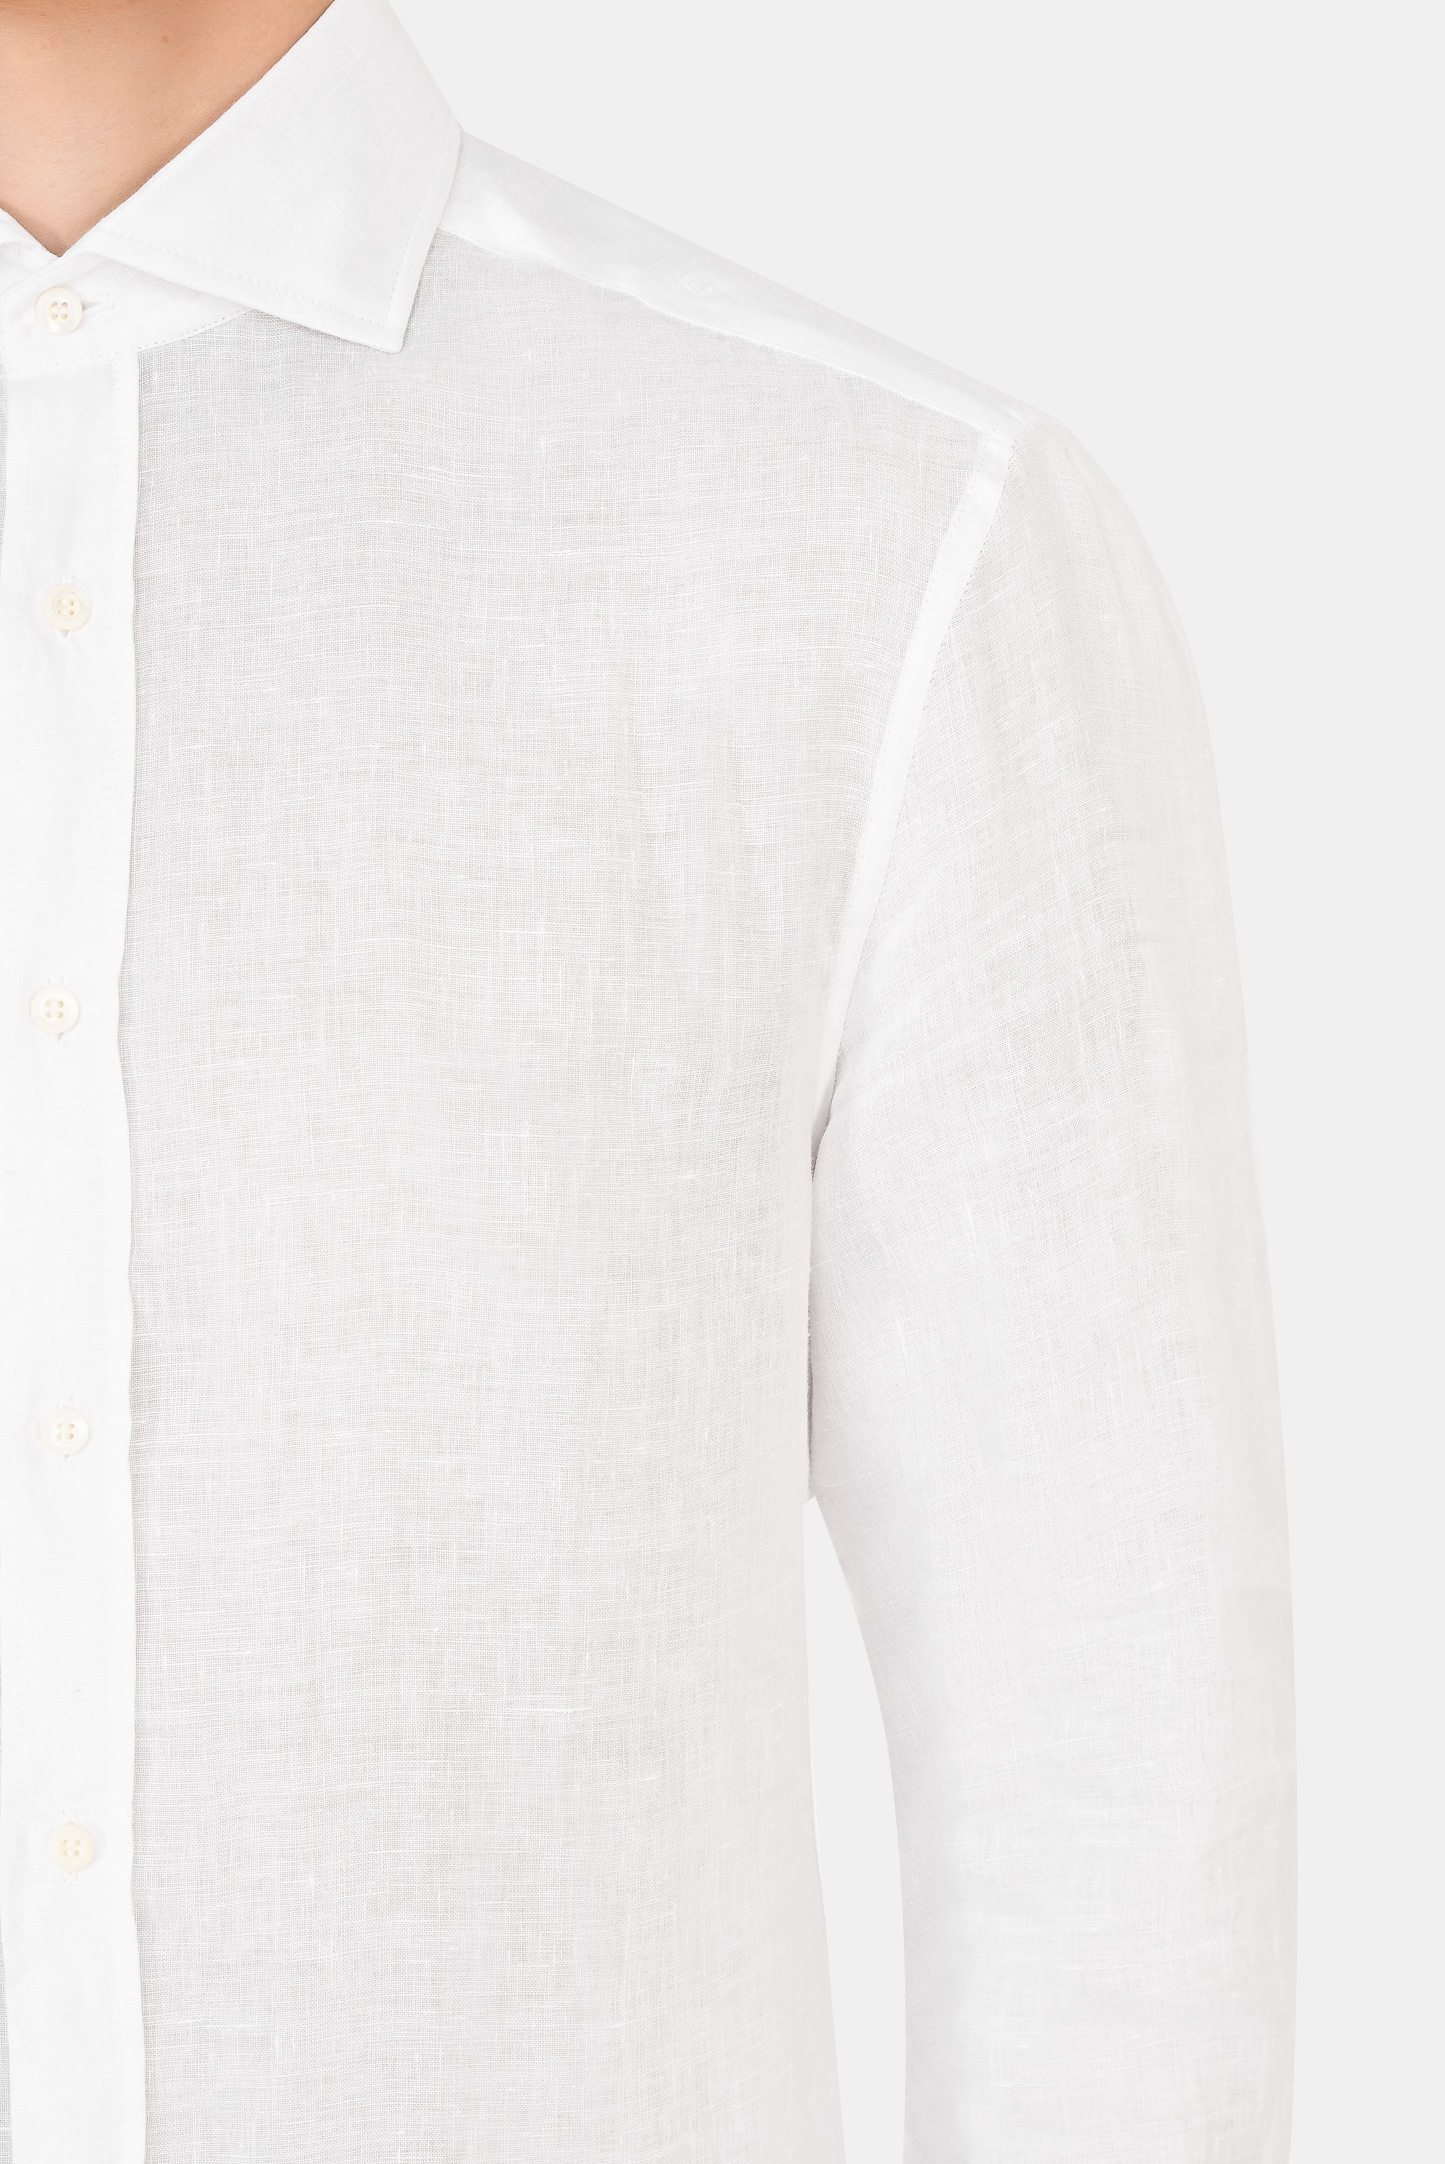 Рубашка BRUNELLO  CUCINELLI MB6081718, цвет: Белый, Мужской